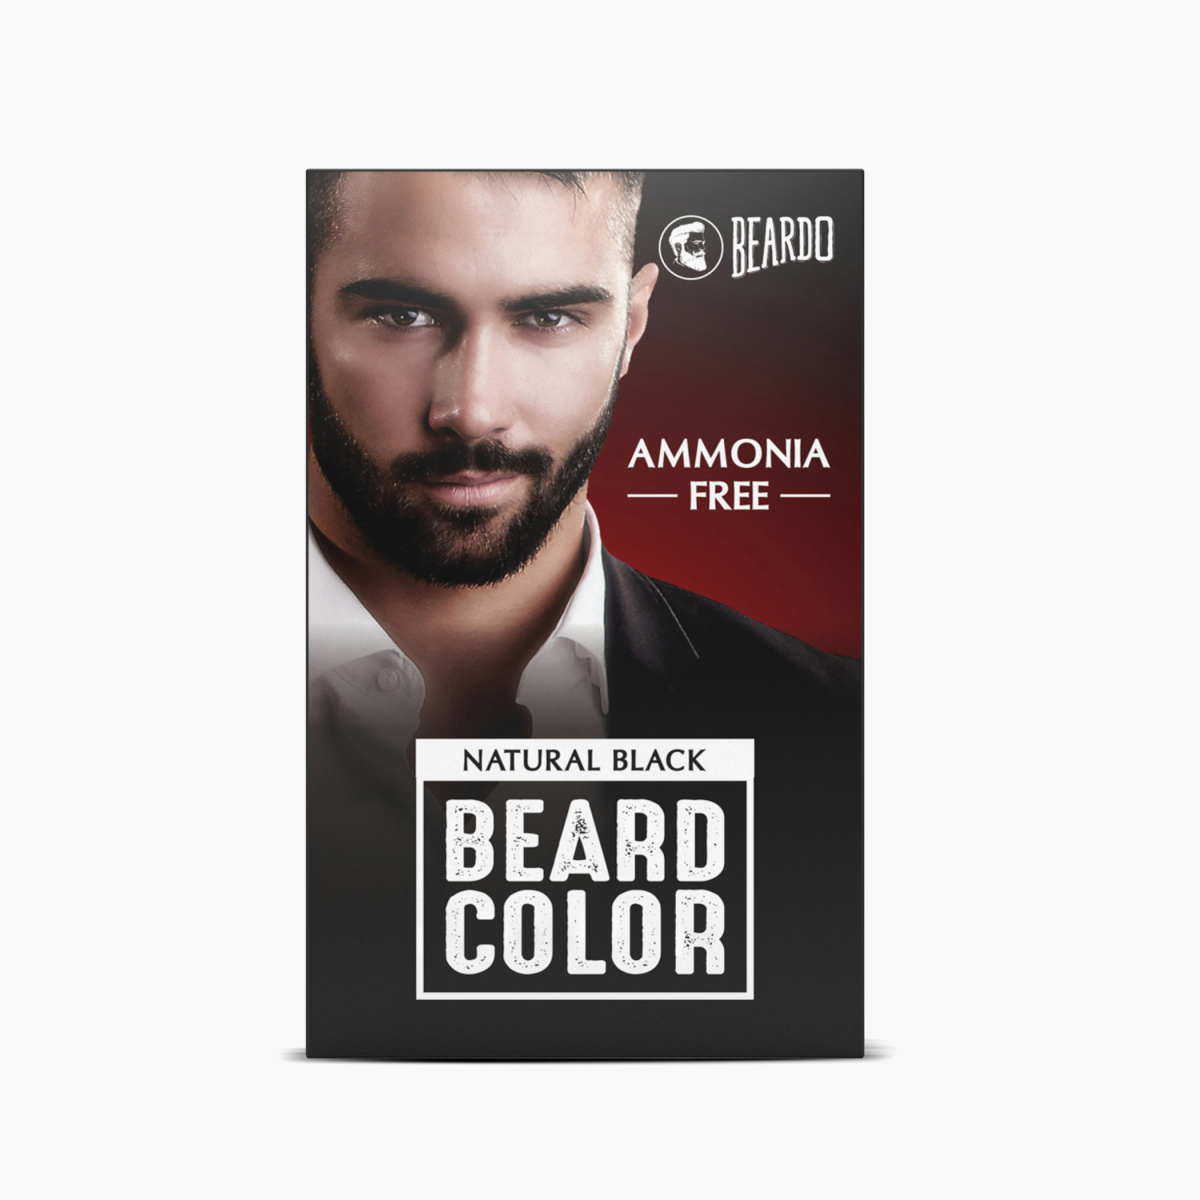 BEARDO Beard Color For Men - Natural Black